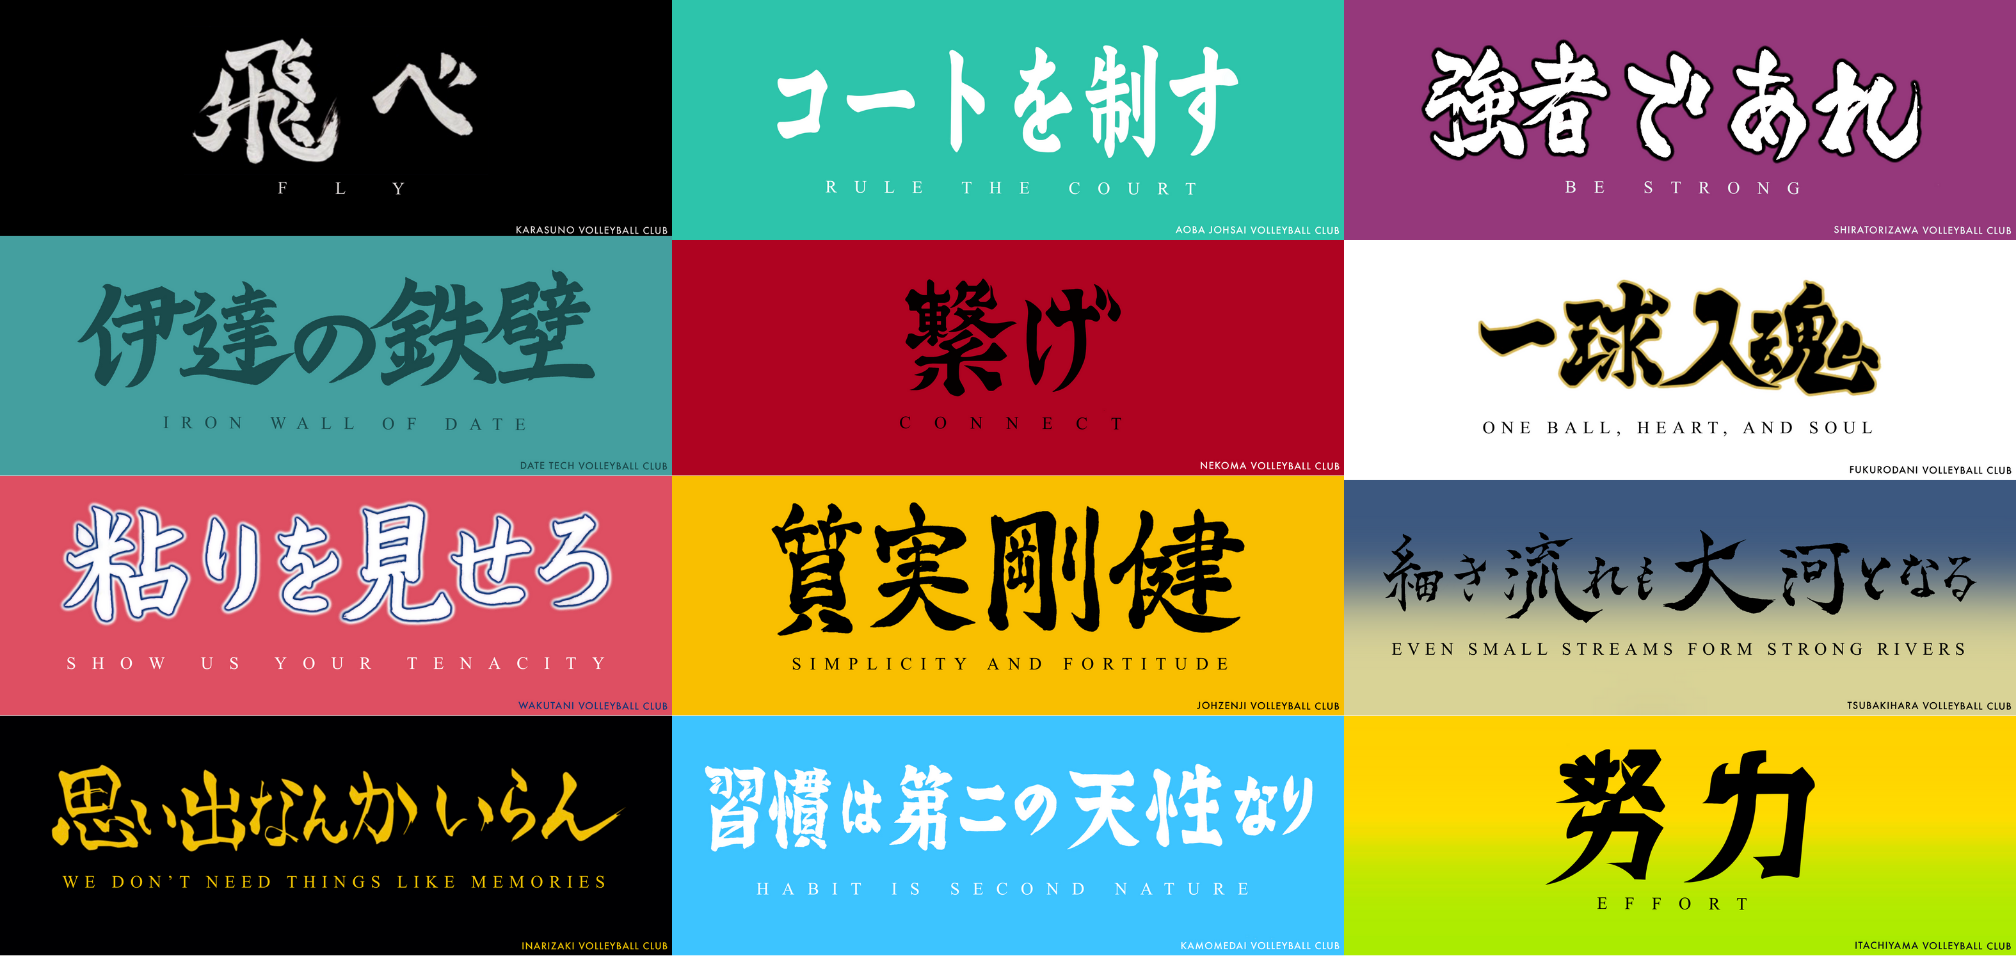 Shiratorizawa Banner Wallpapers